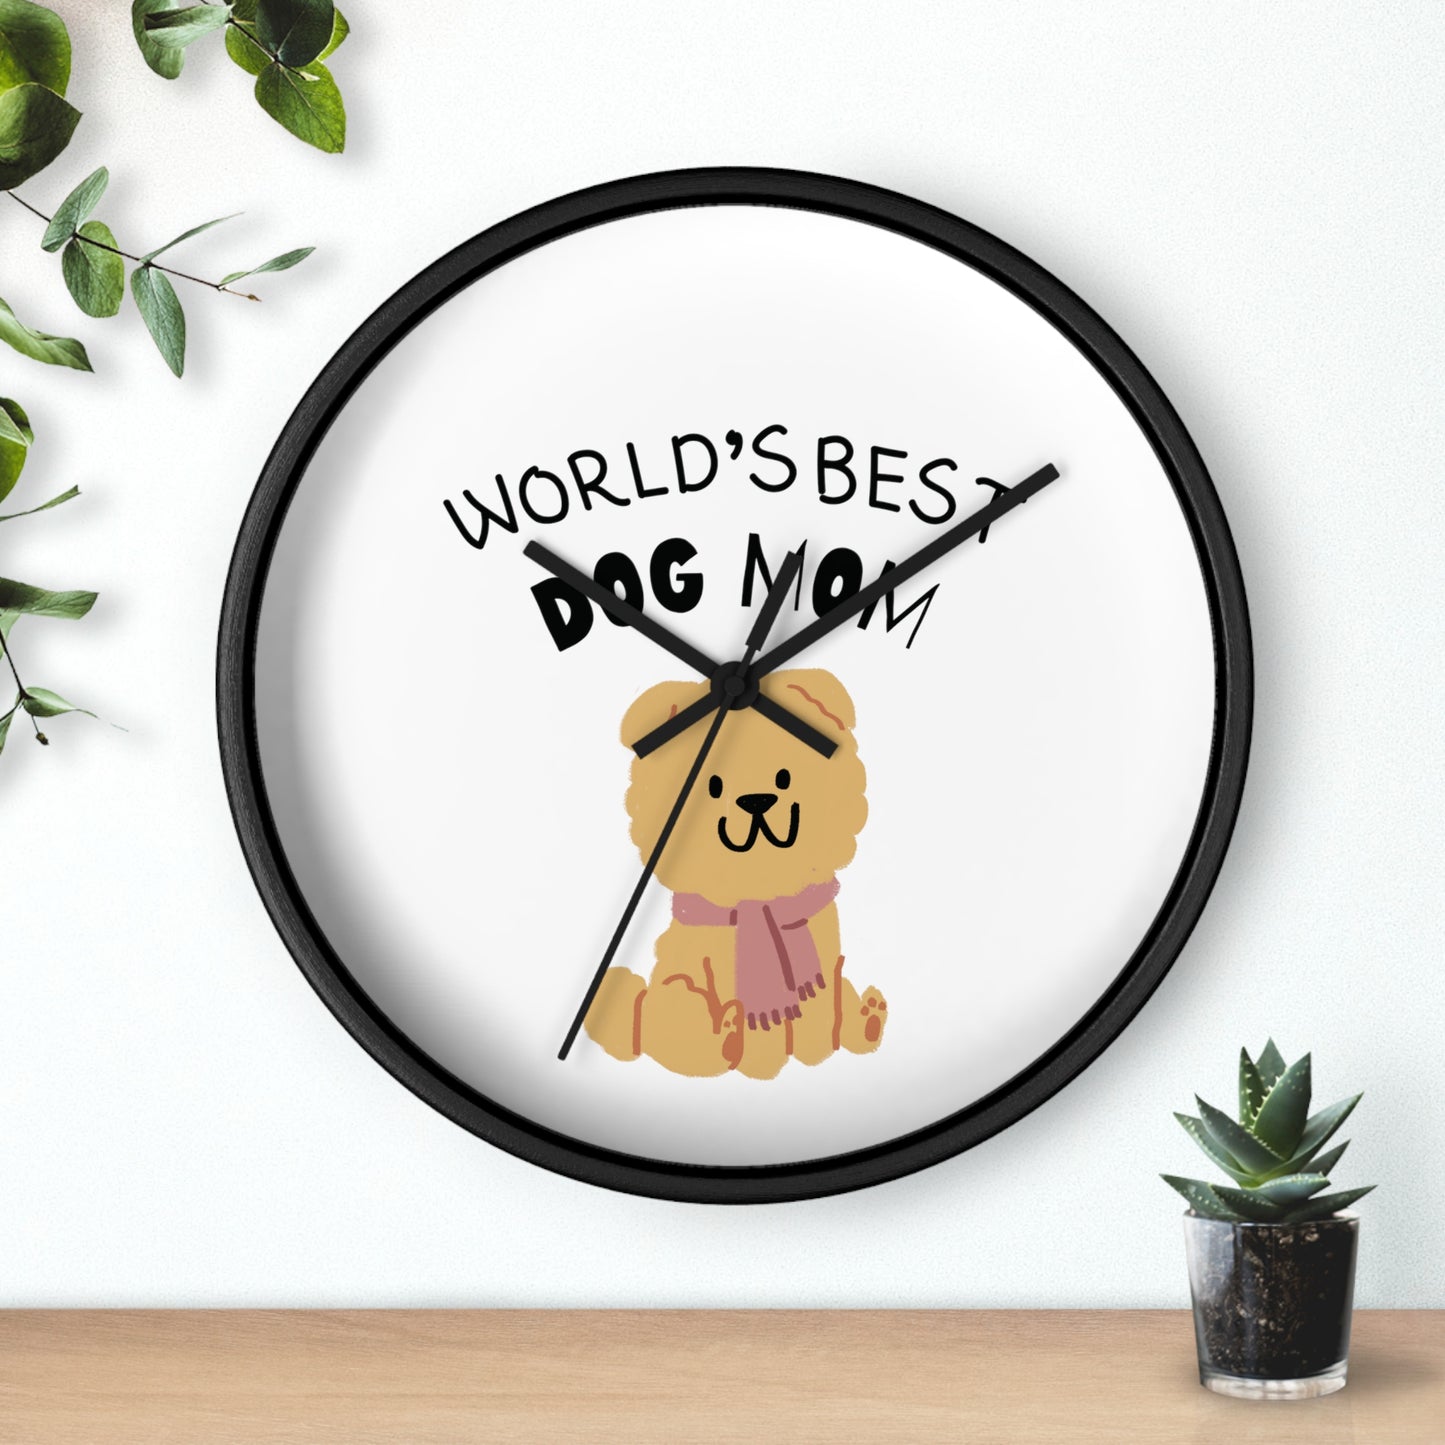 World's Best Dog Mom Wall clock